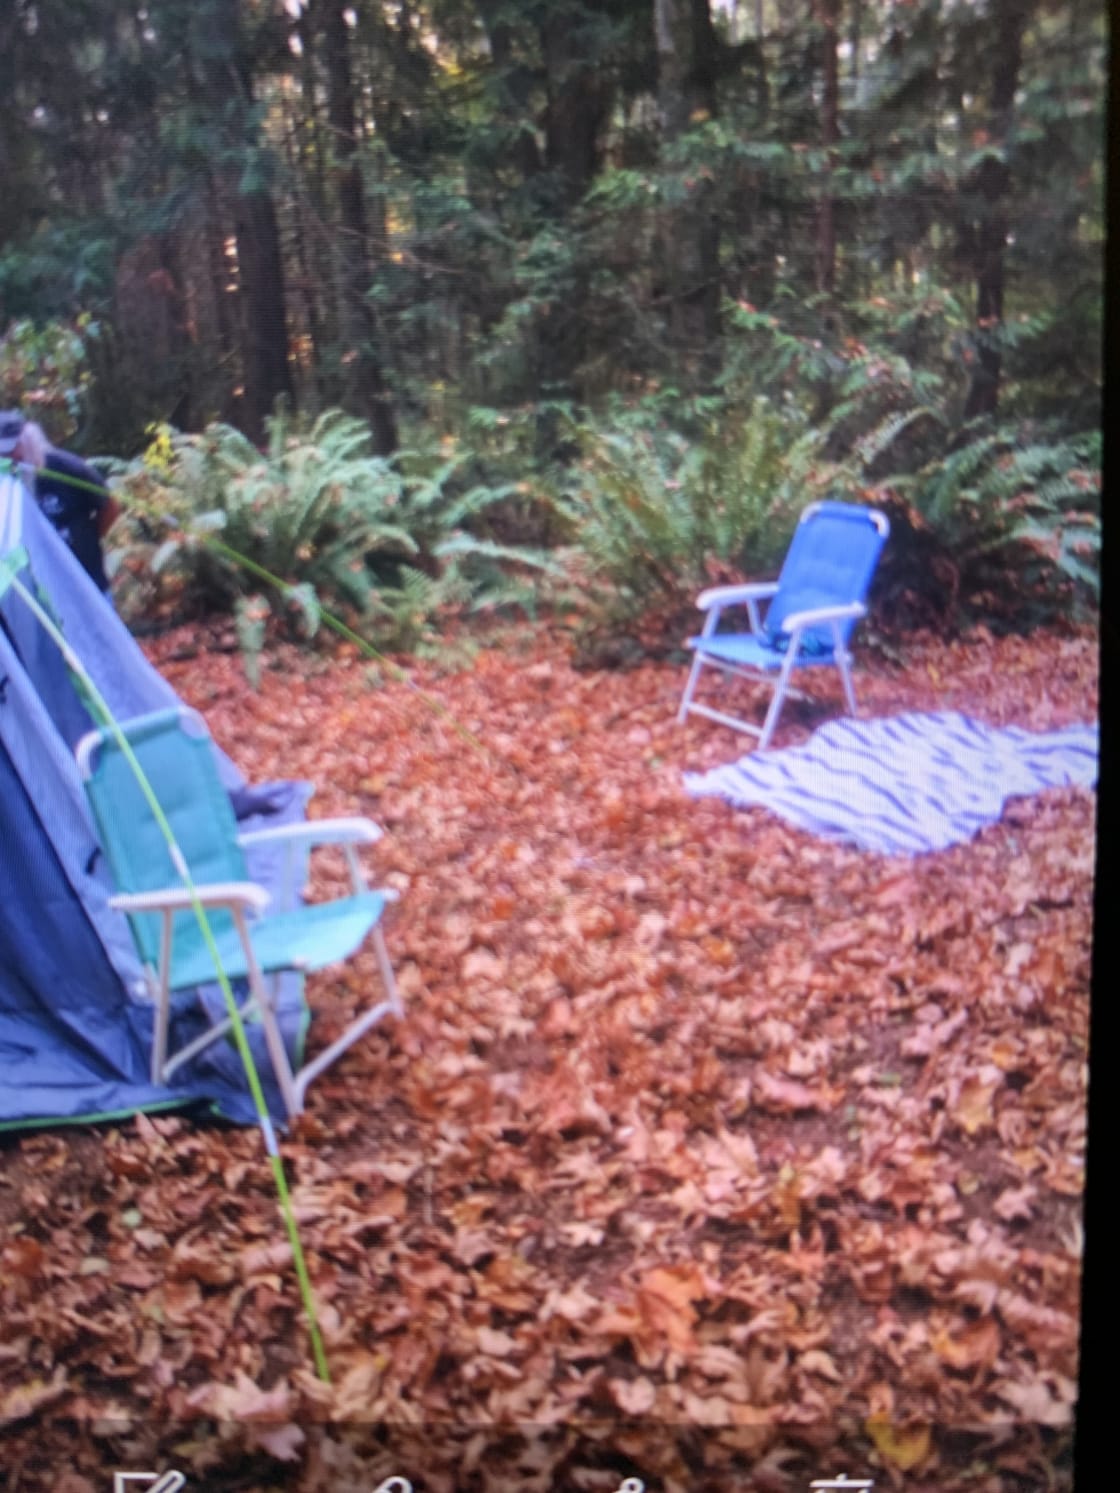 Campsite set up